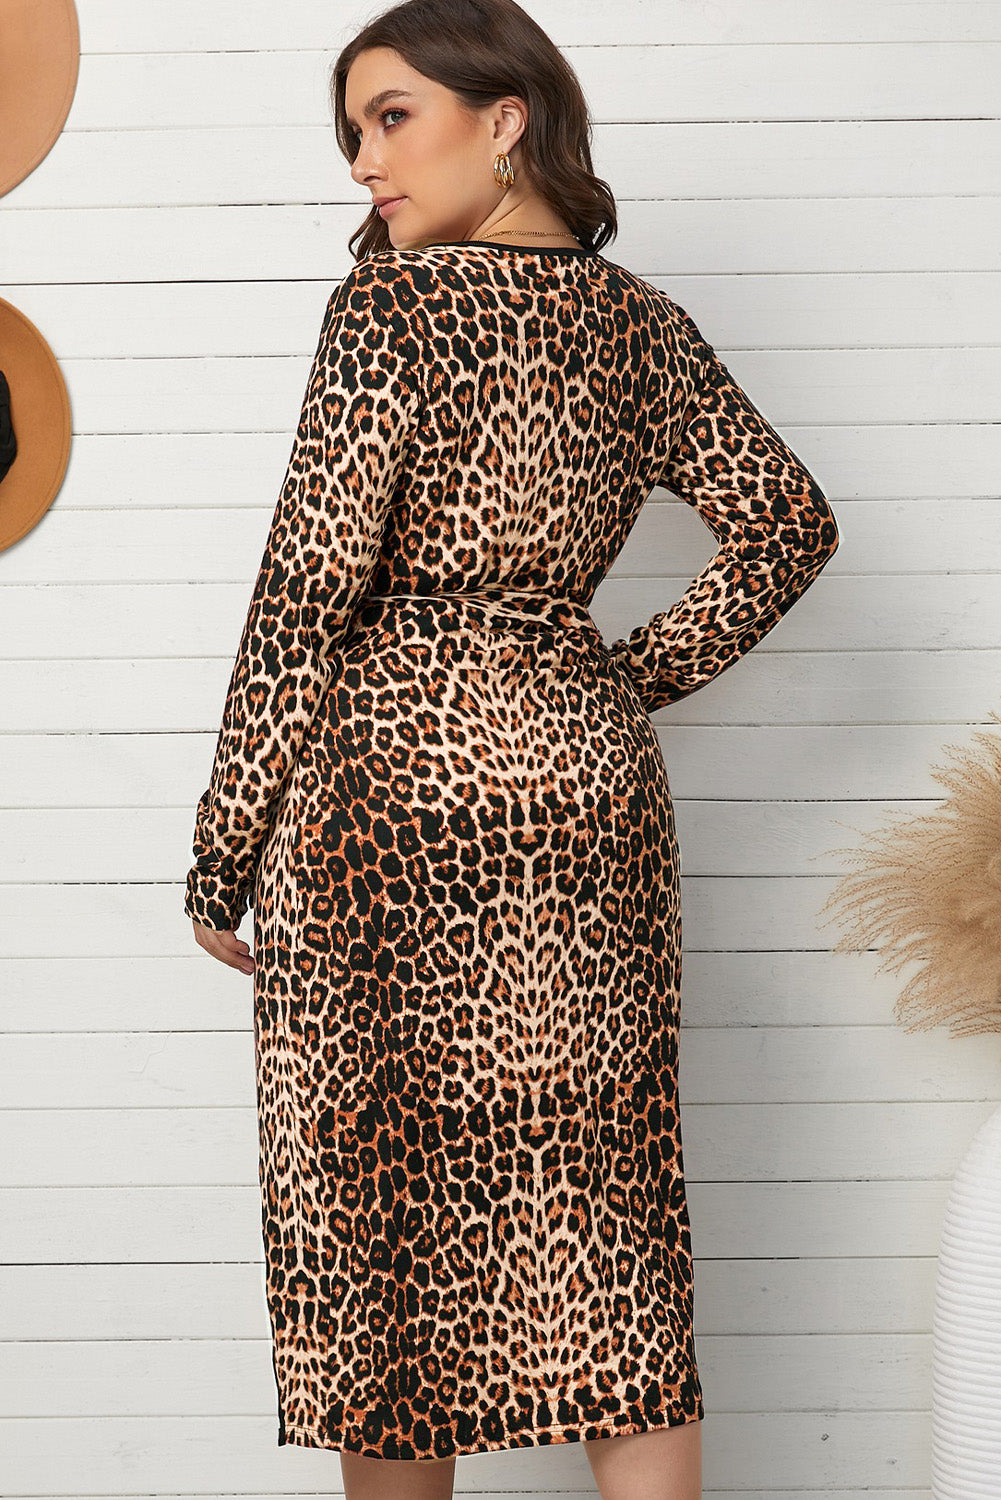 Leopard Print Wrap Dress with Belt for Curvy Women